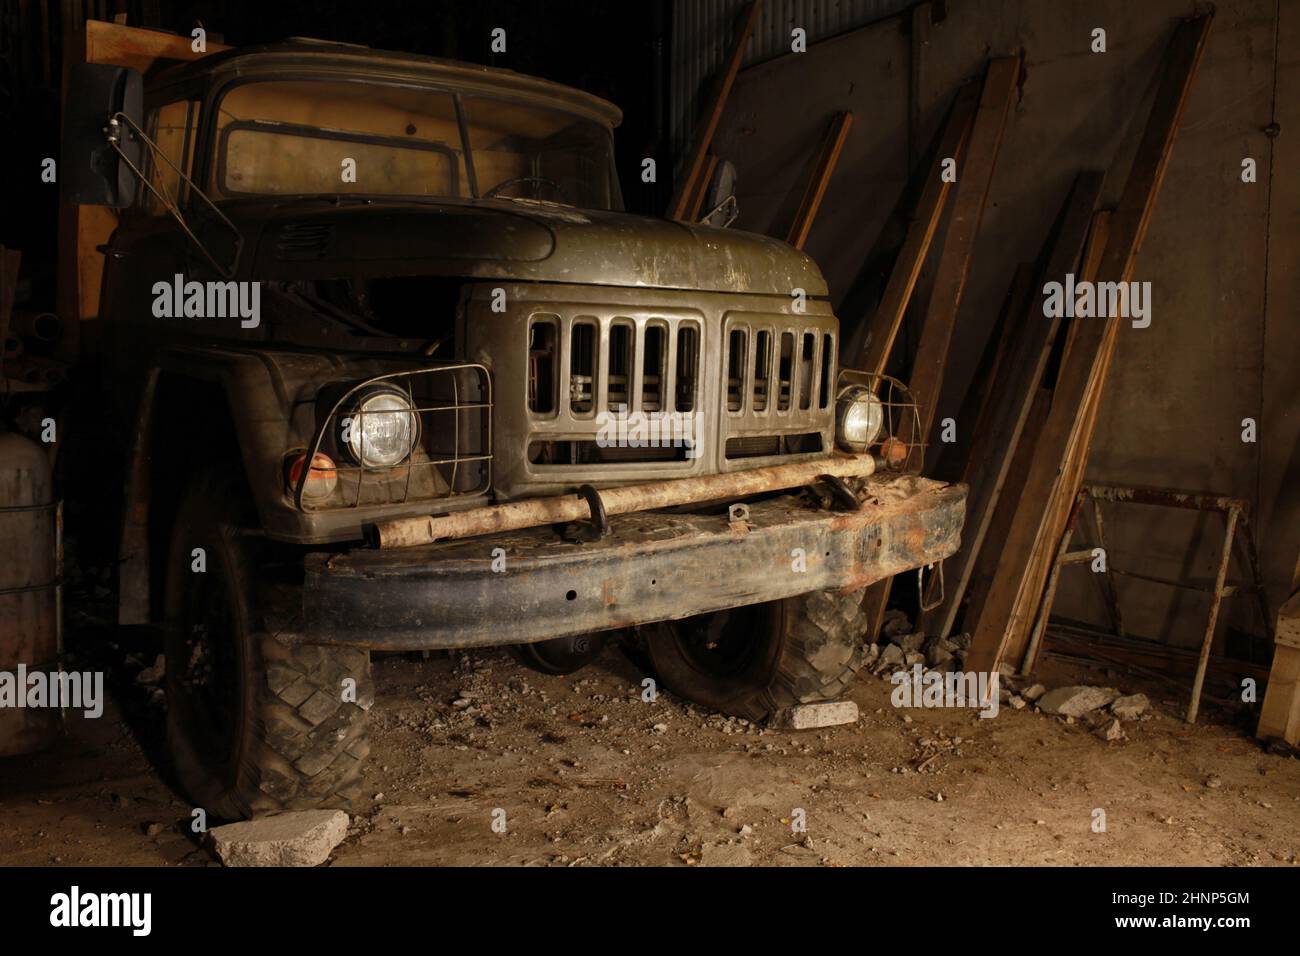 old army truck in a dark garage Stock Photo